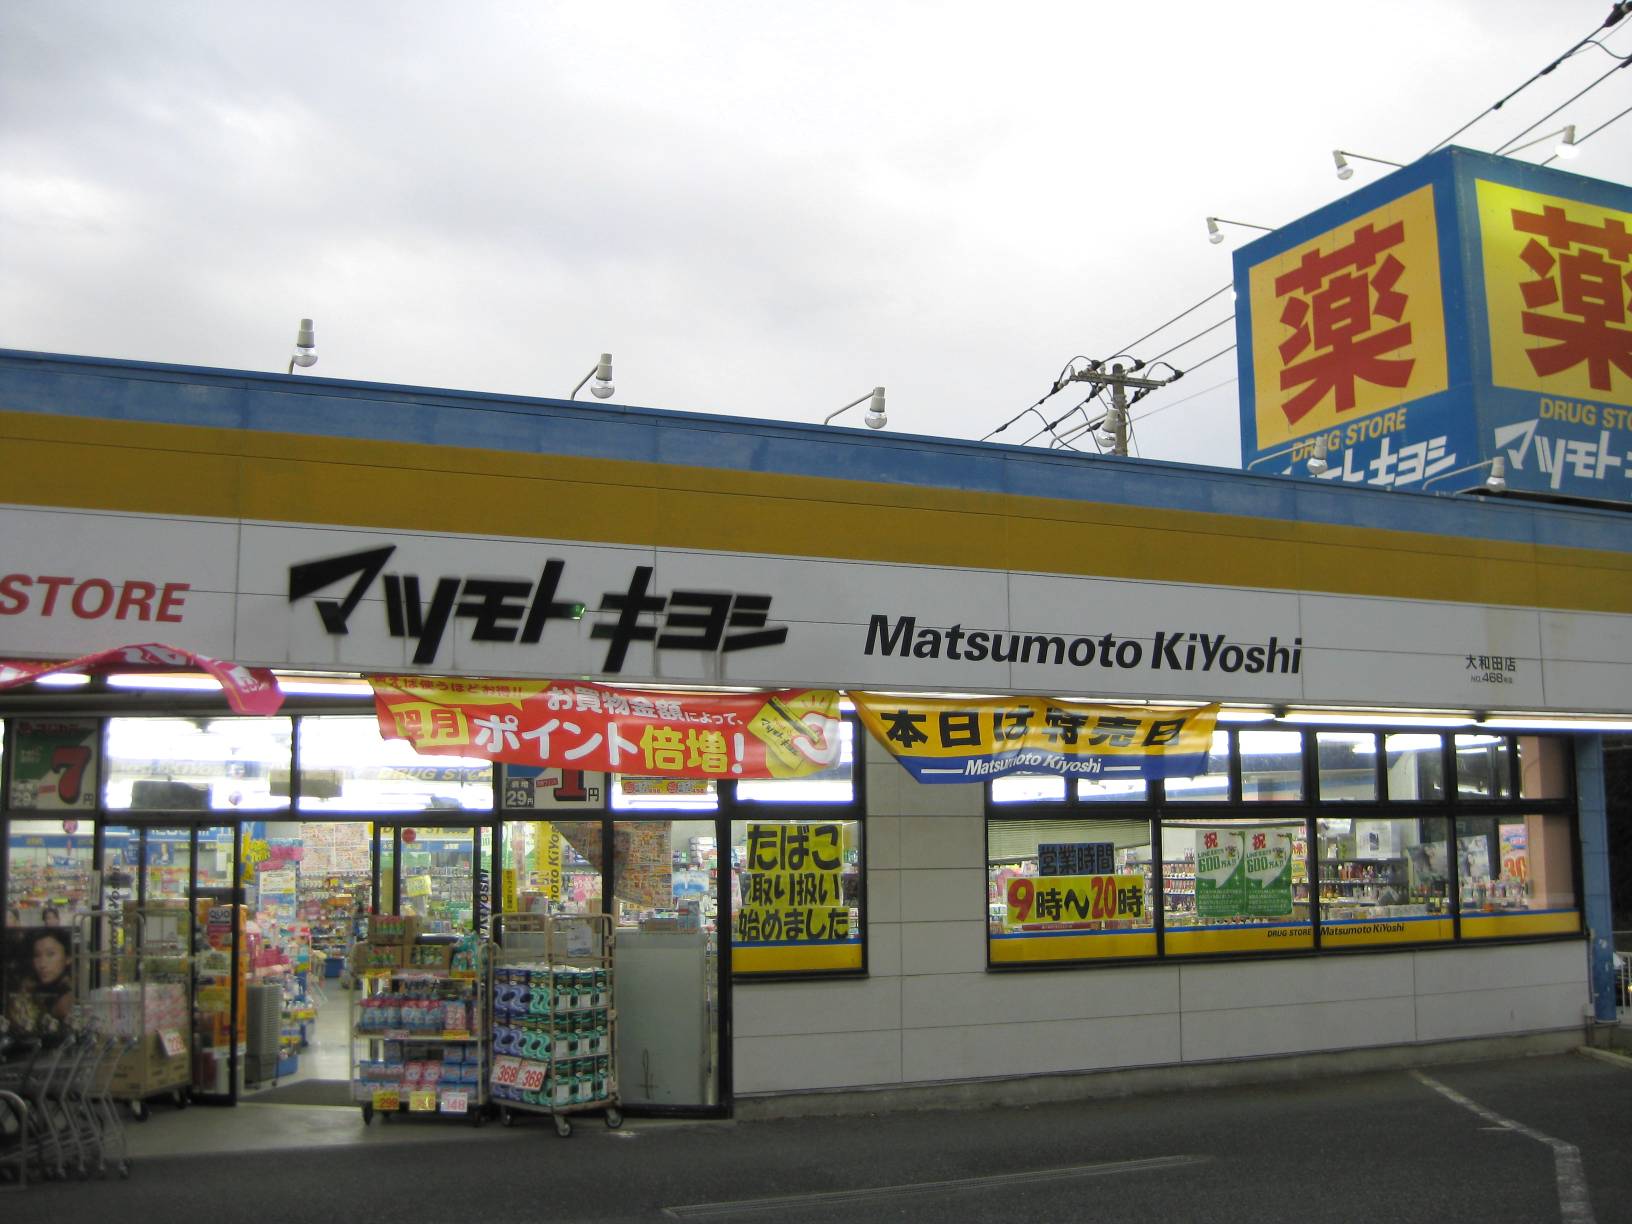 Dorakkusutoa. Drugstore Matsumotokiyoshi Owada store 988m to (drugstore)